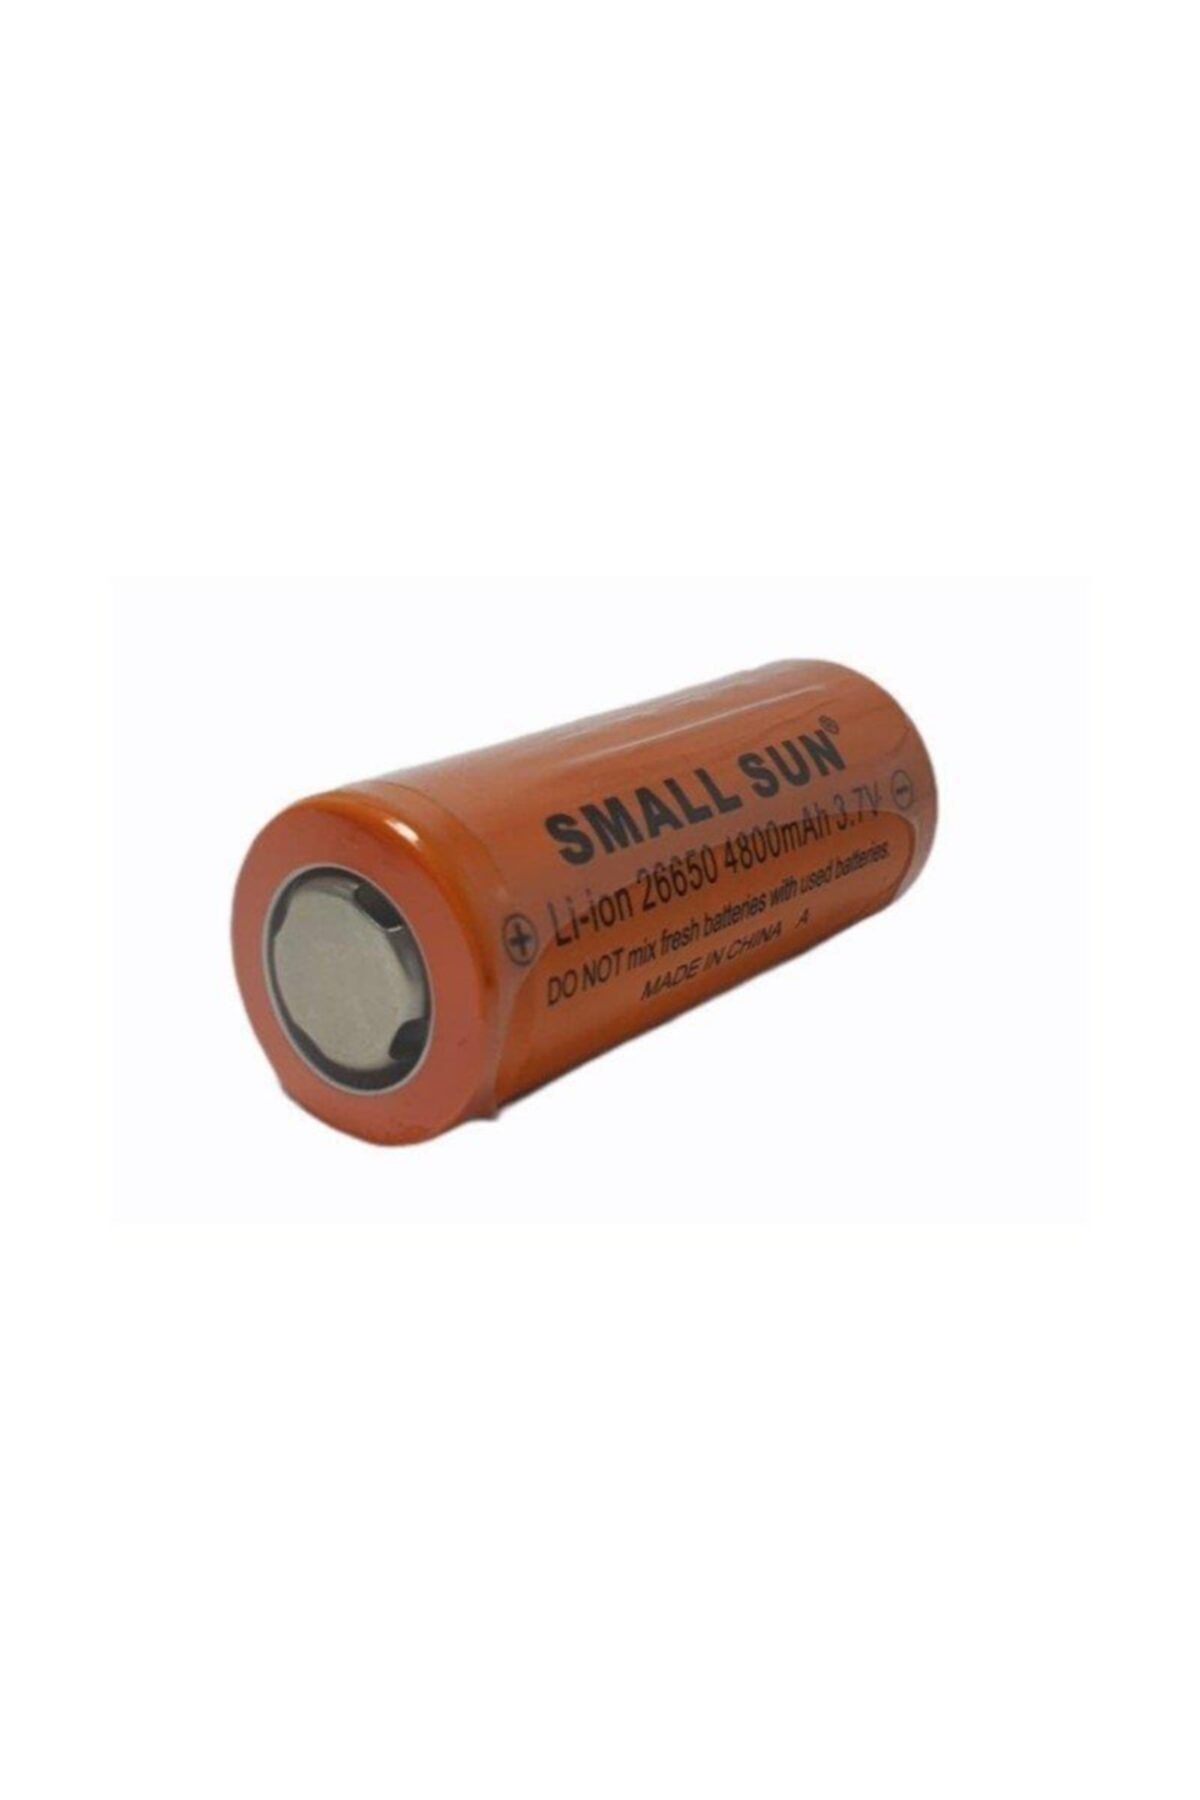 electroon Small Sun 26650 3.7v 4800mah Lithium Li-ion Pil 26x65mm